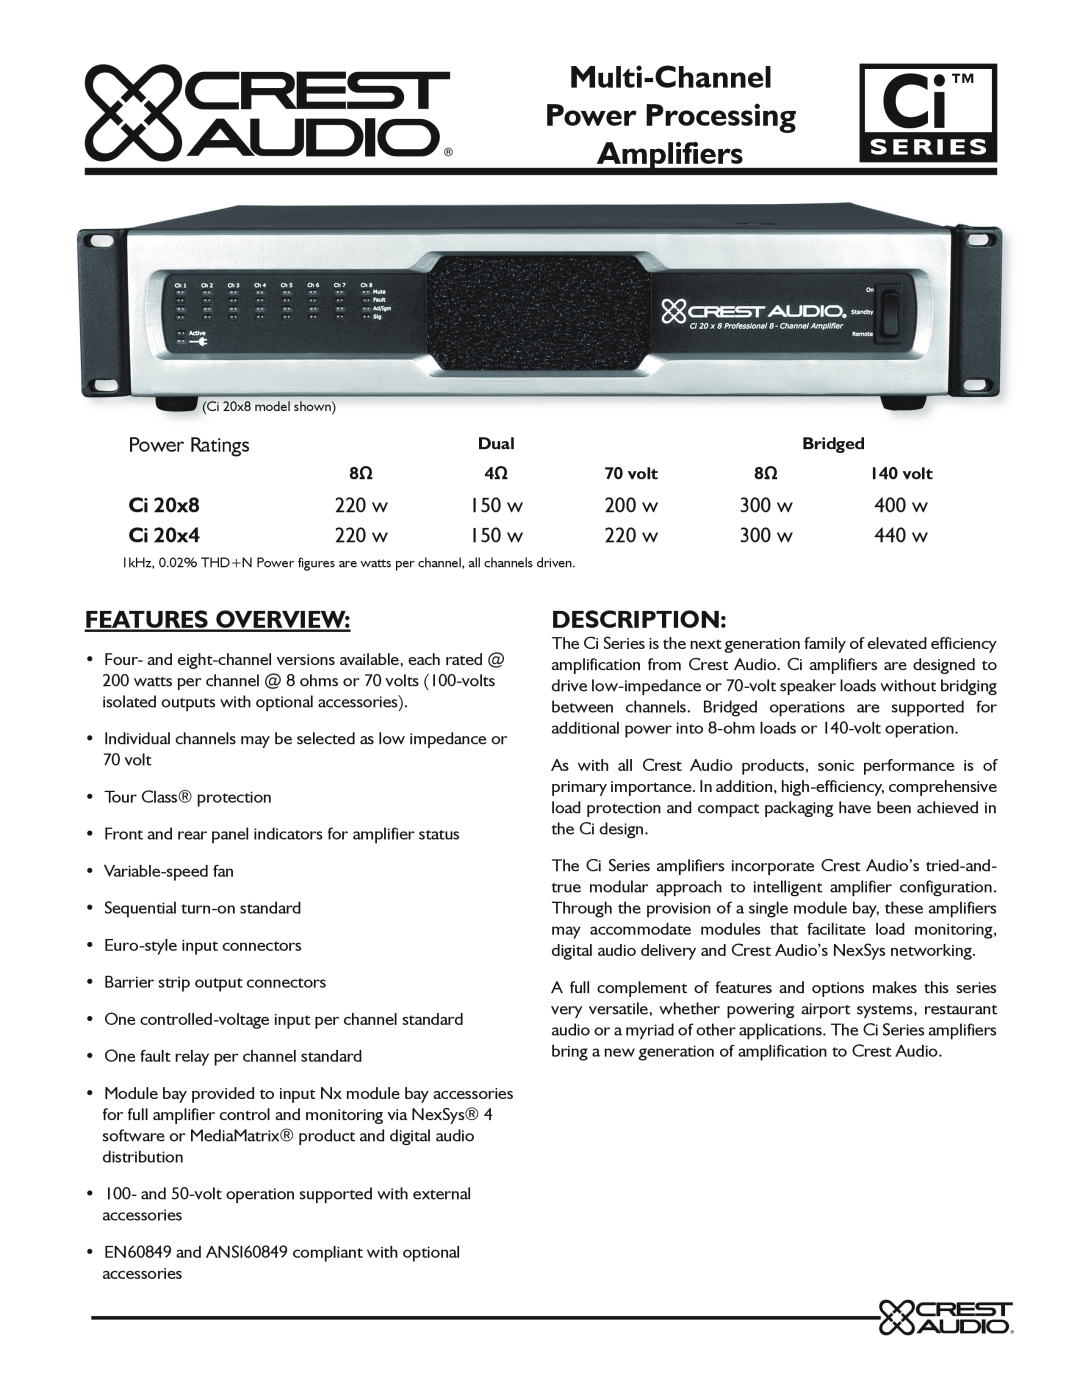 Crest Audio Ci 20 X 8 manual Multi-Channel Power Processing Amplifiers, Features Overview, Description, series, 200 w 